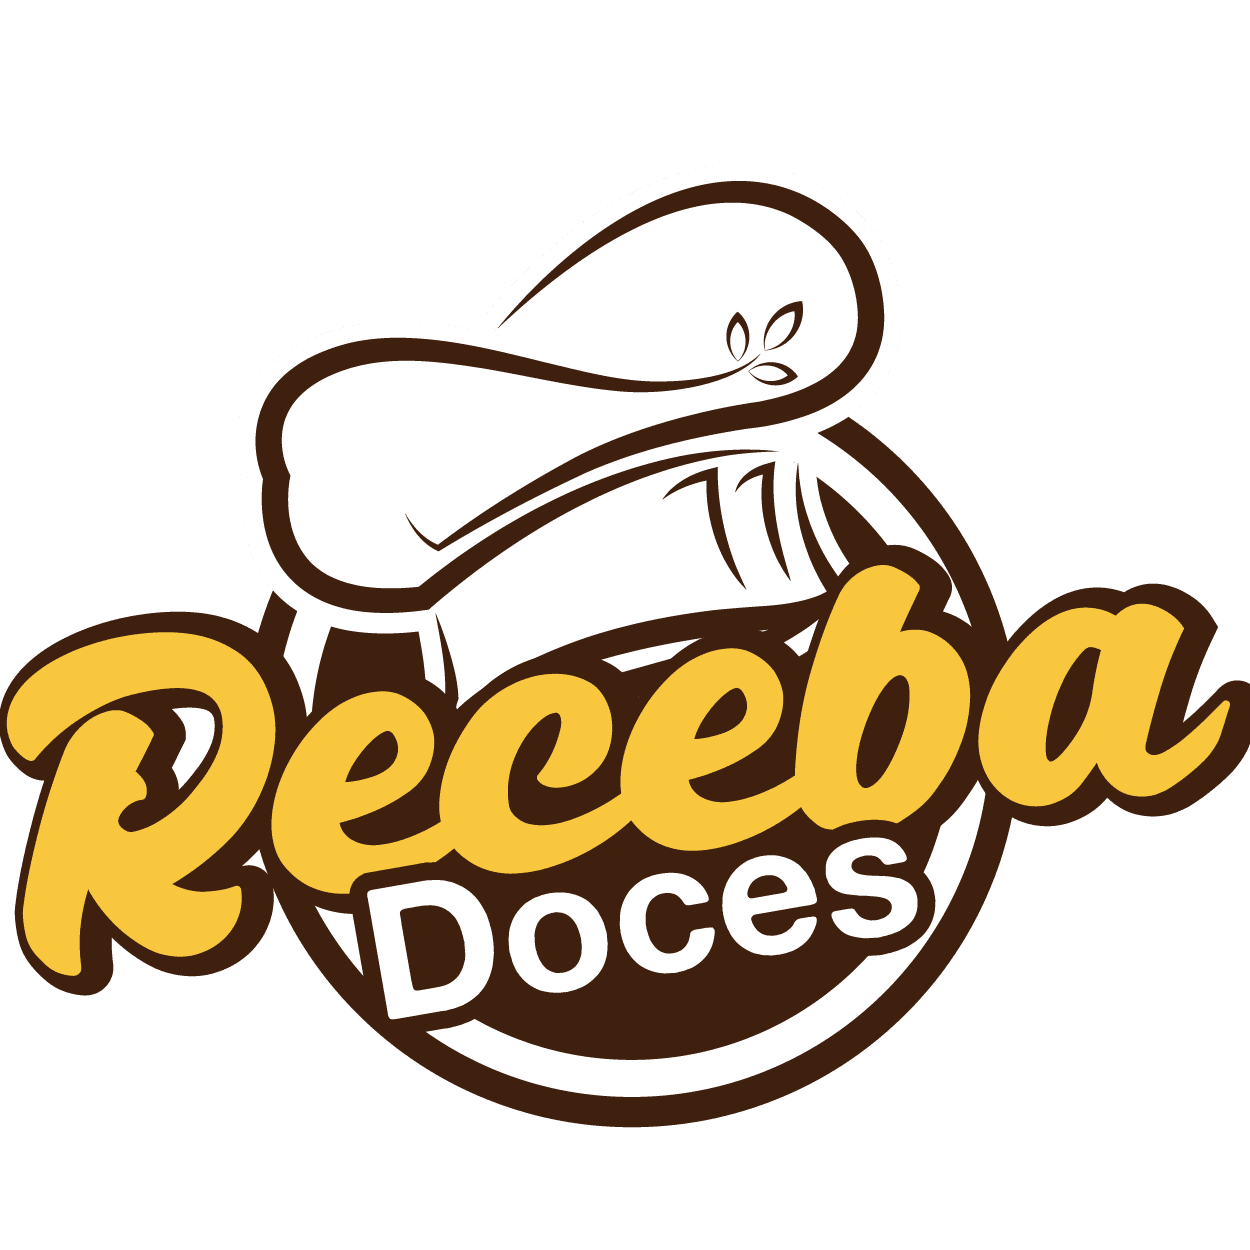 Receba Doces